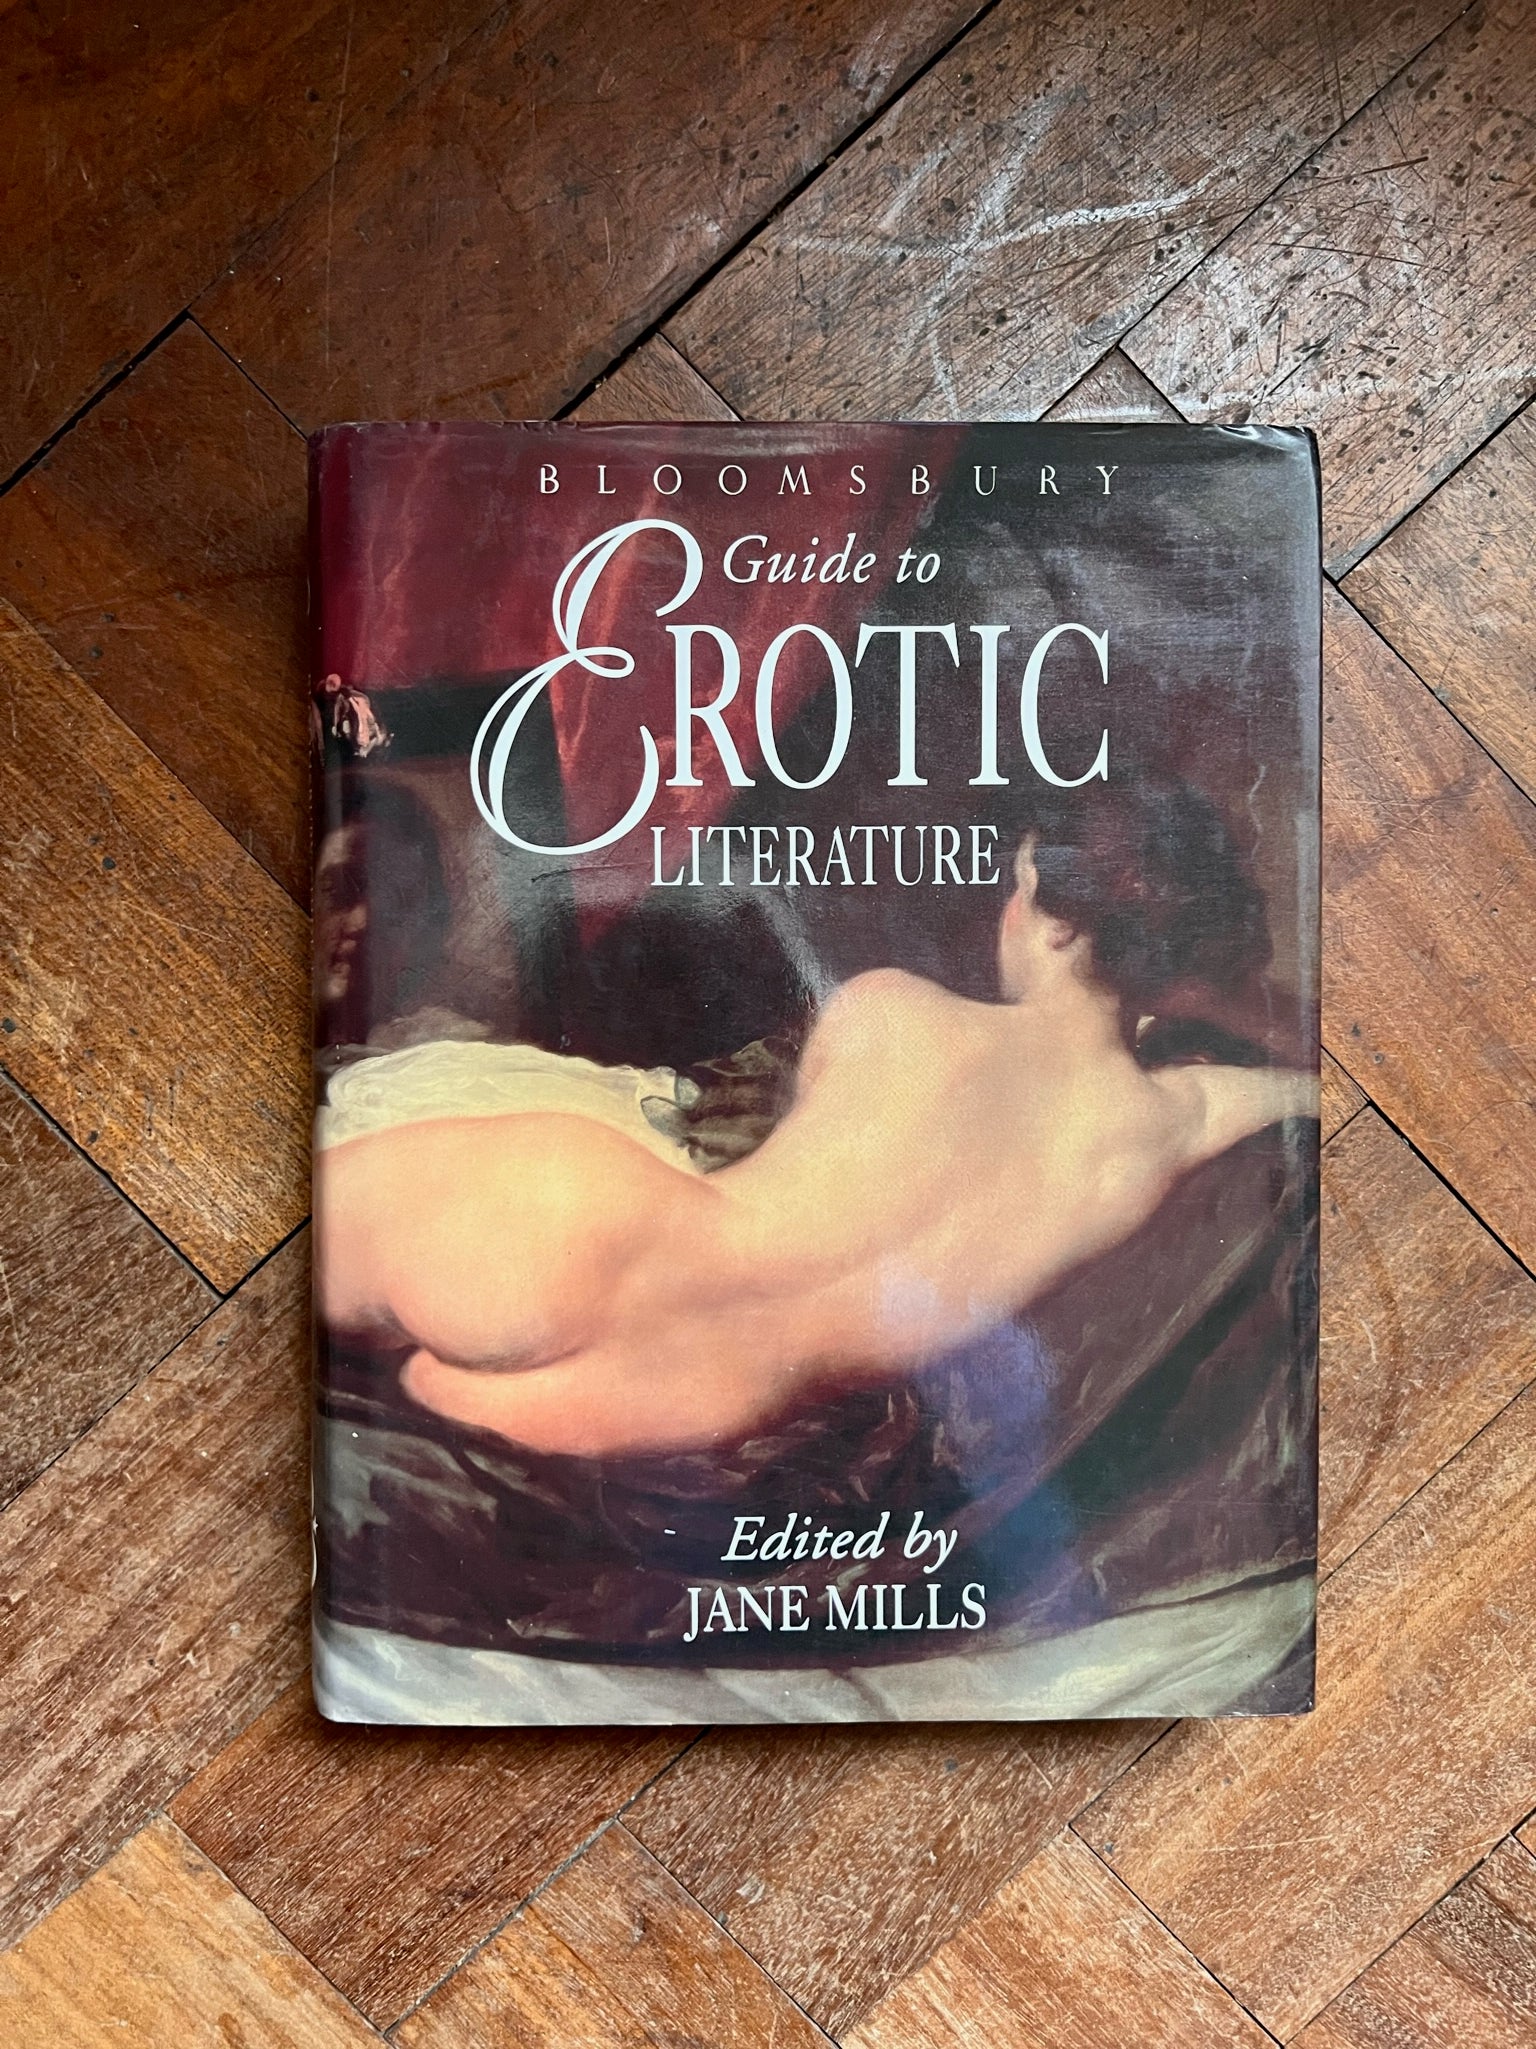 Guide to Erotic Literature - Jane Mills